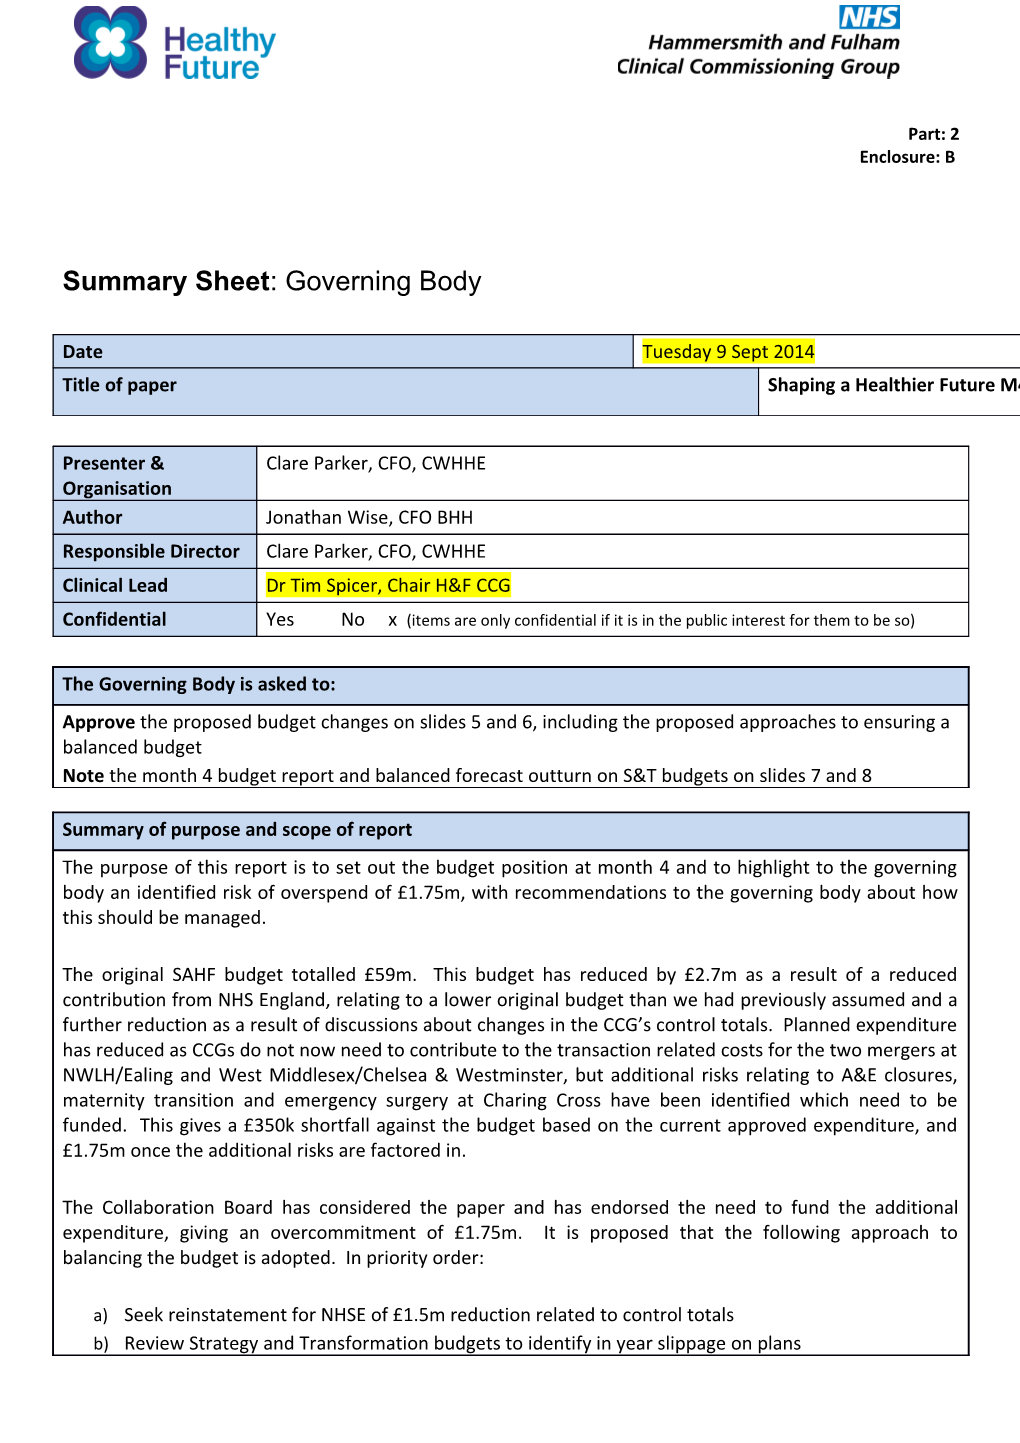 Summary Sheet: Governing Body